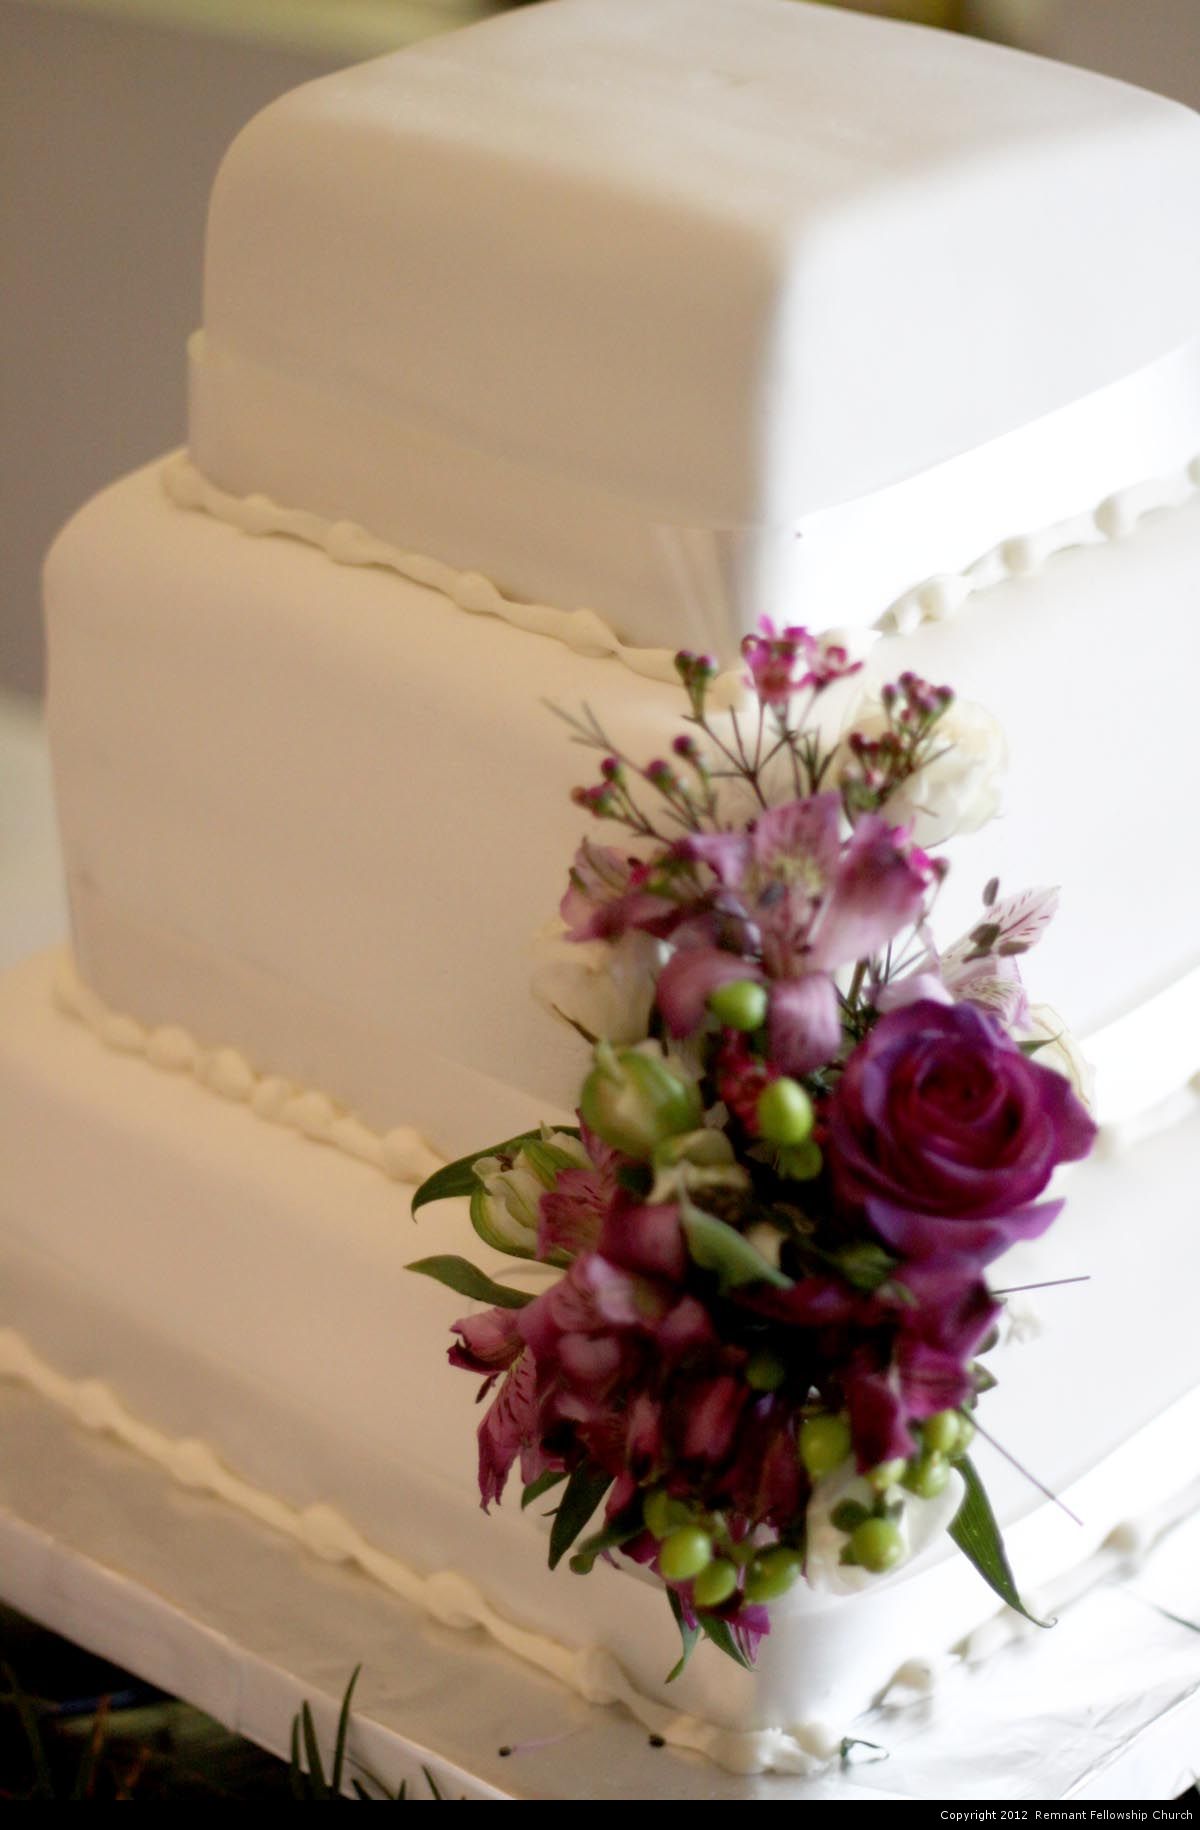 Polivka/Leaman Wedding - Cake